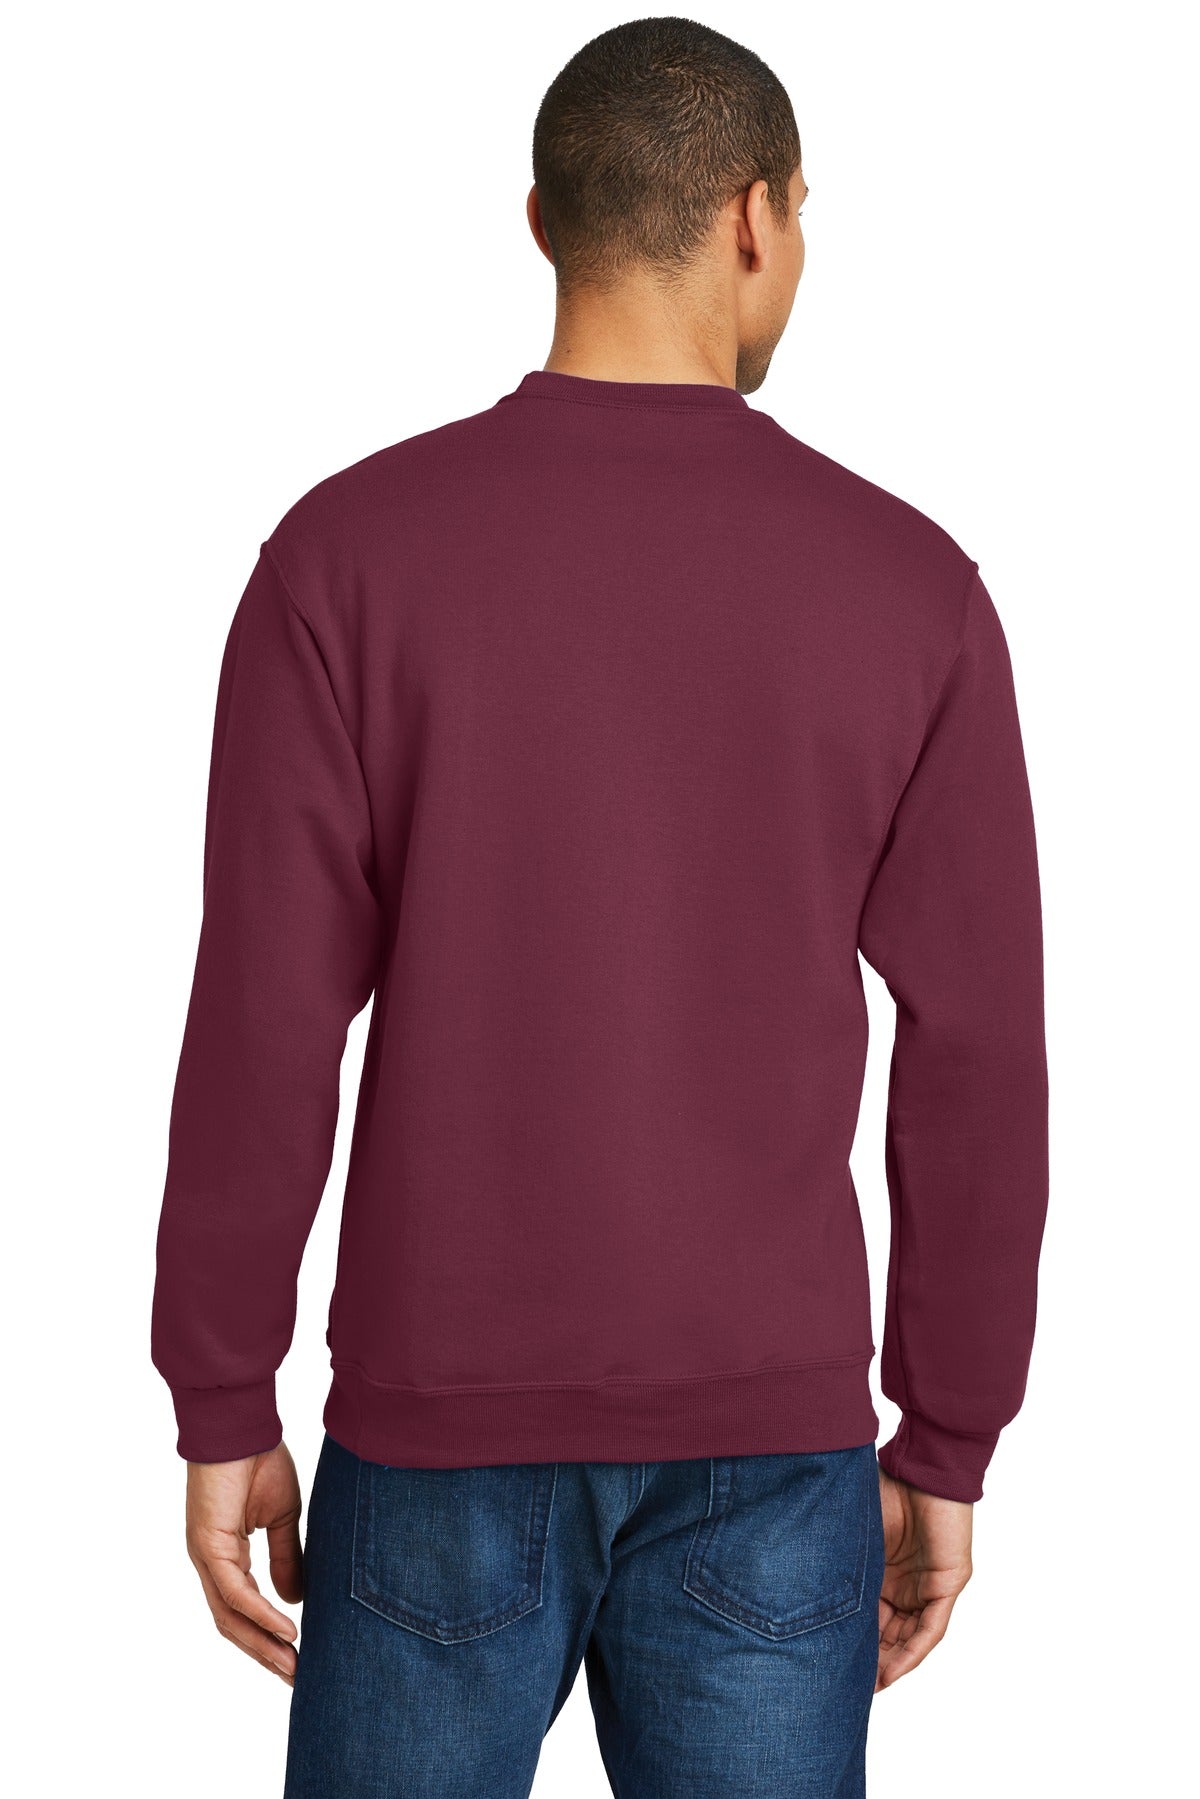 JERZEES® - NuBlend® Crewneck Sweatshirt. 562M [Maroon] - DFW Impression